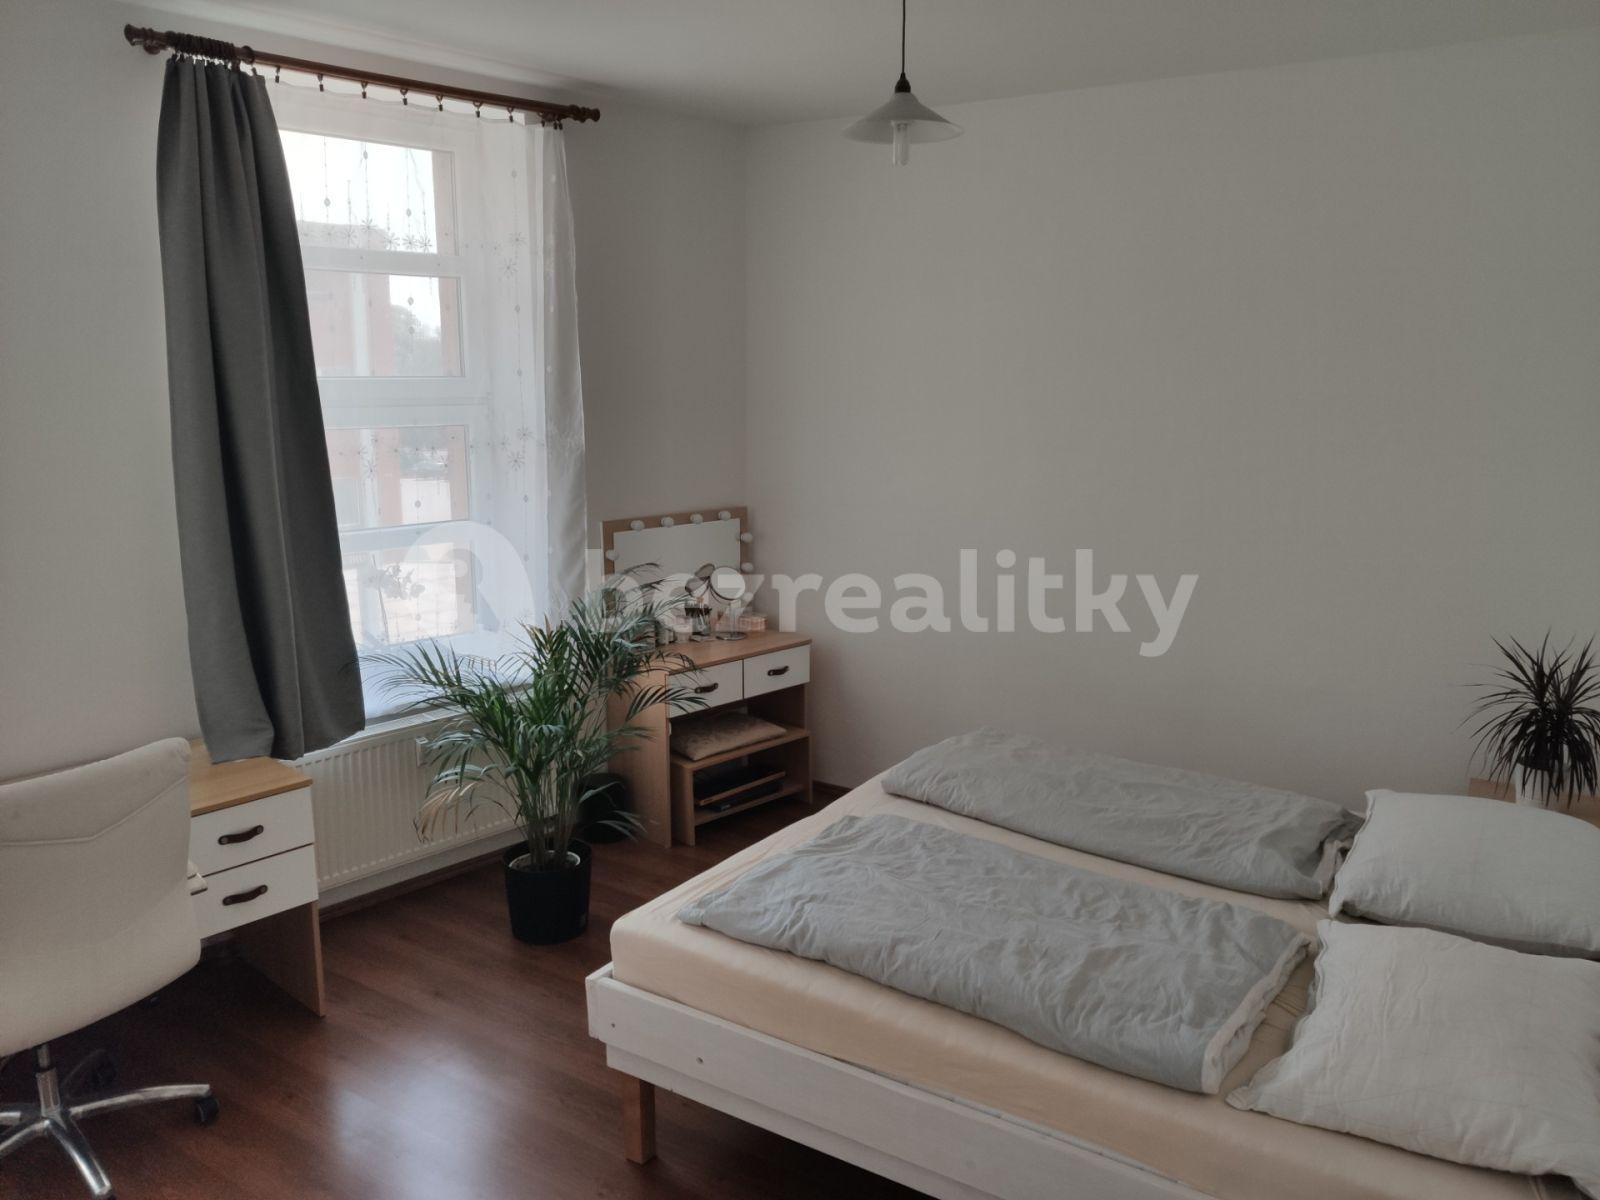 Predaj bytu 2-izbový 82 m², Cejl, Brno, Jihomoravský kraj